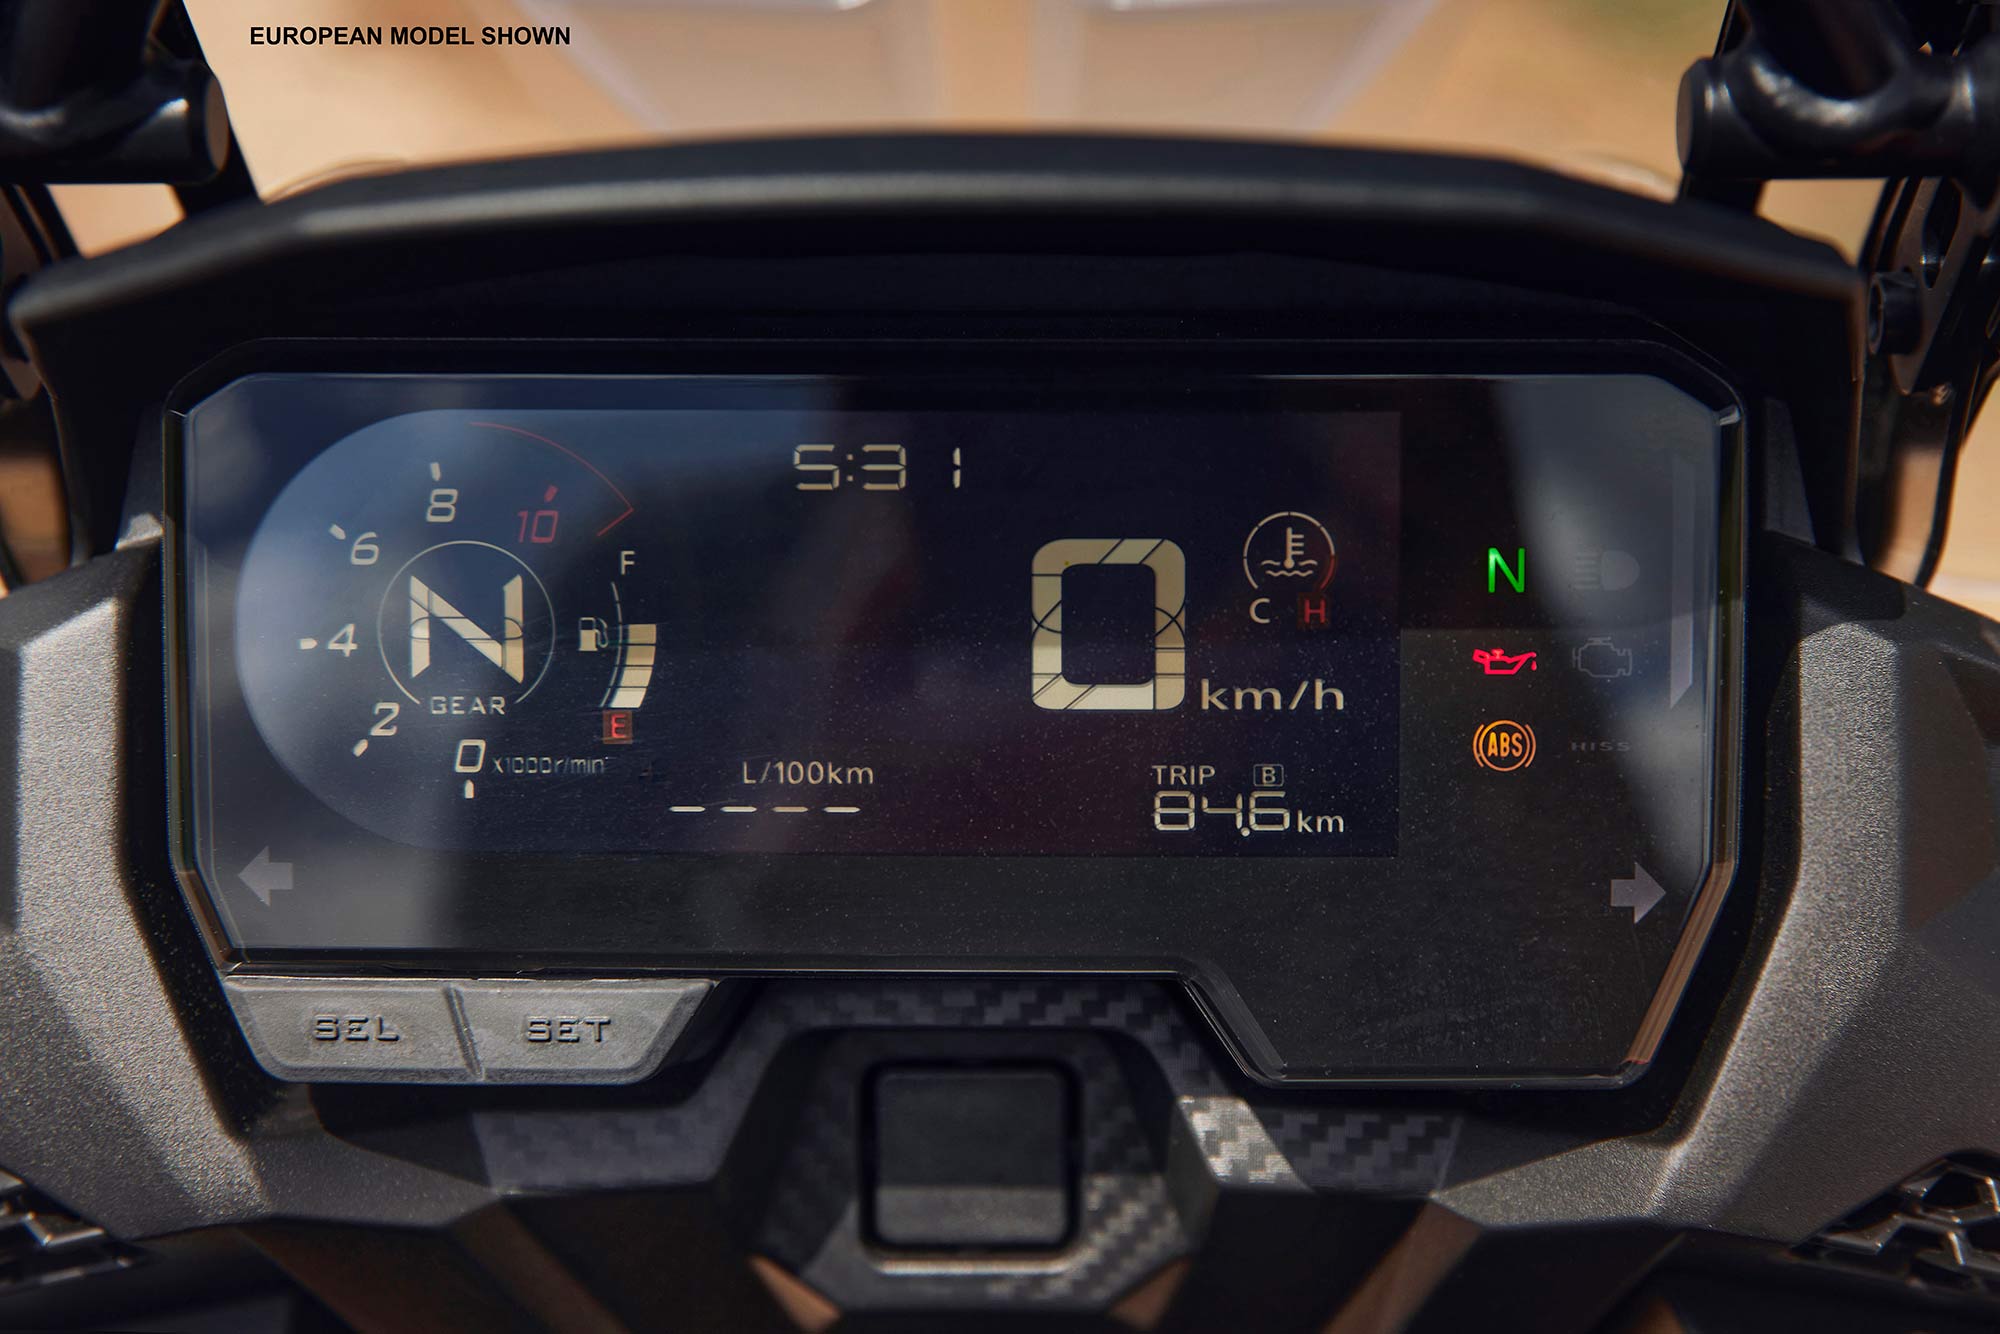 New Honda CB500X Review 2022